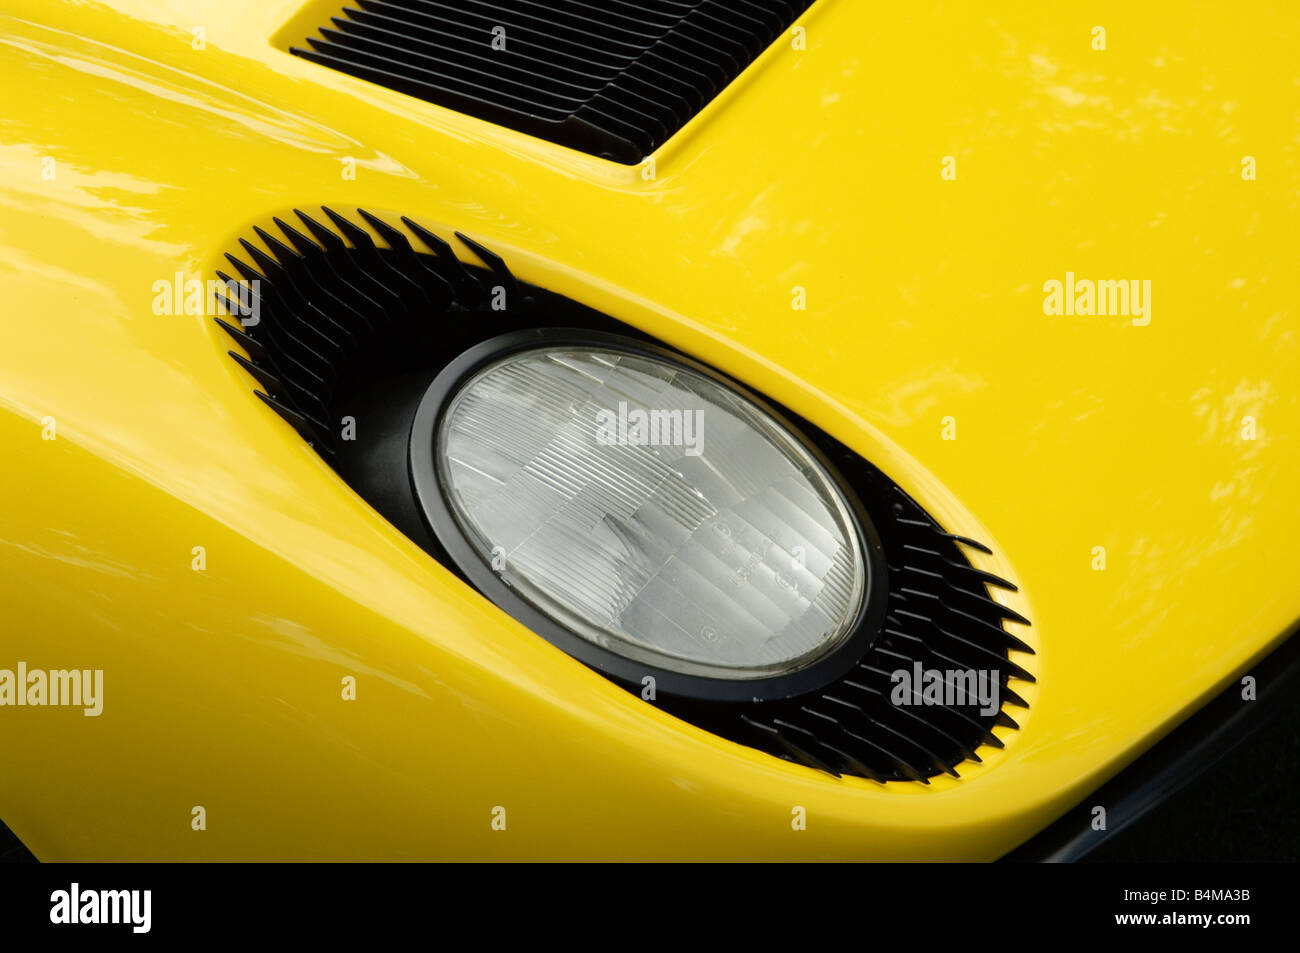 Lamborghini miura p400 hi-res stock photography and images - Alamy